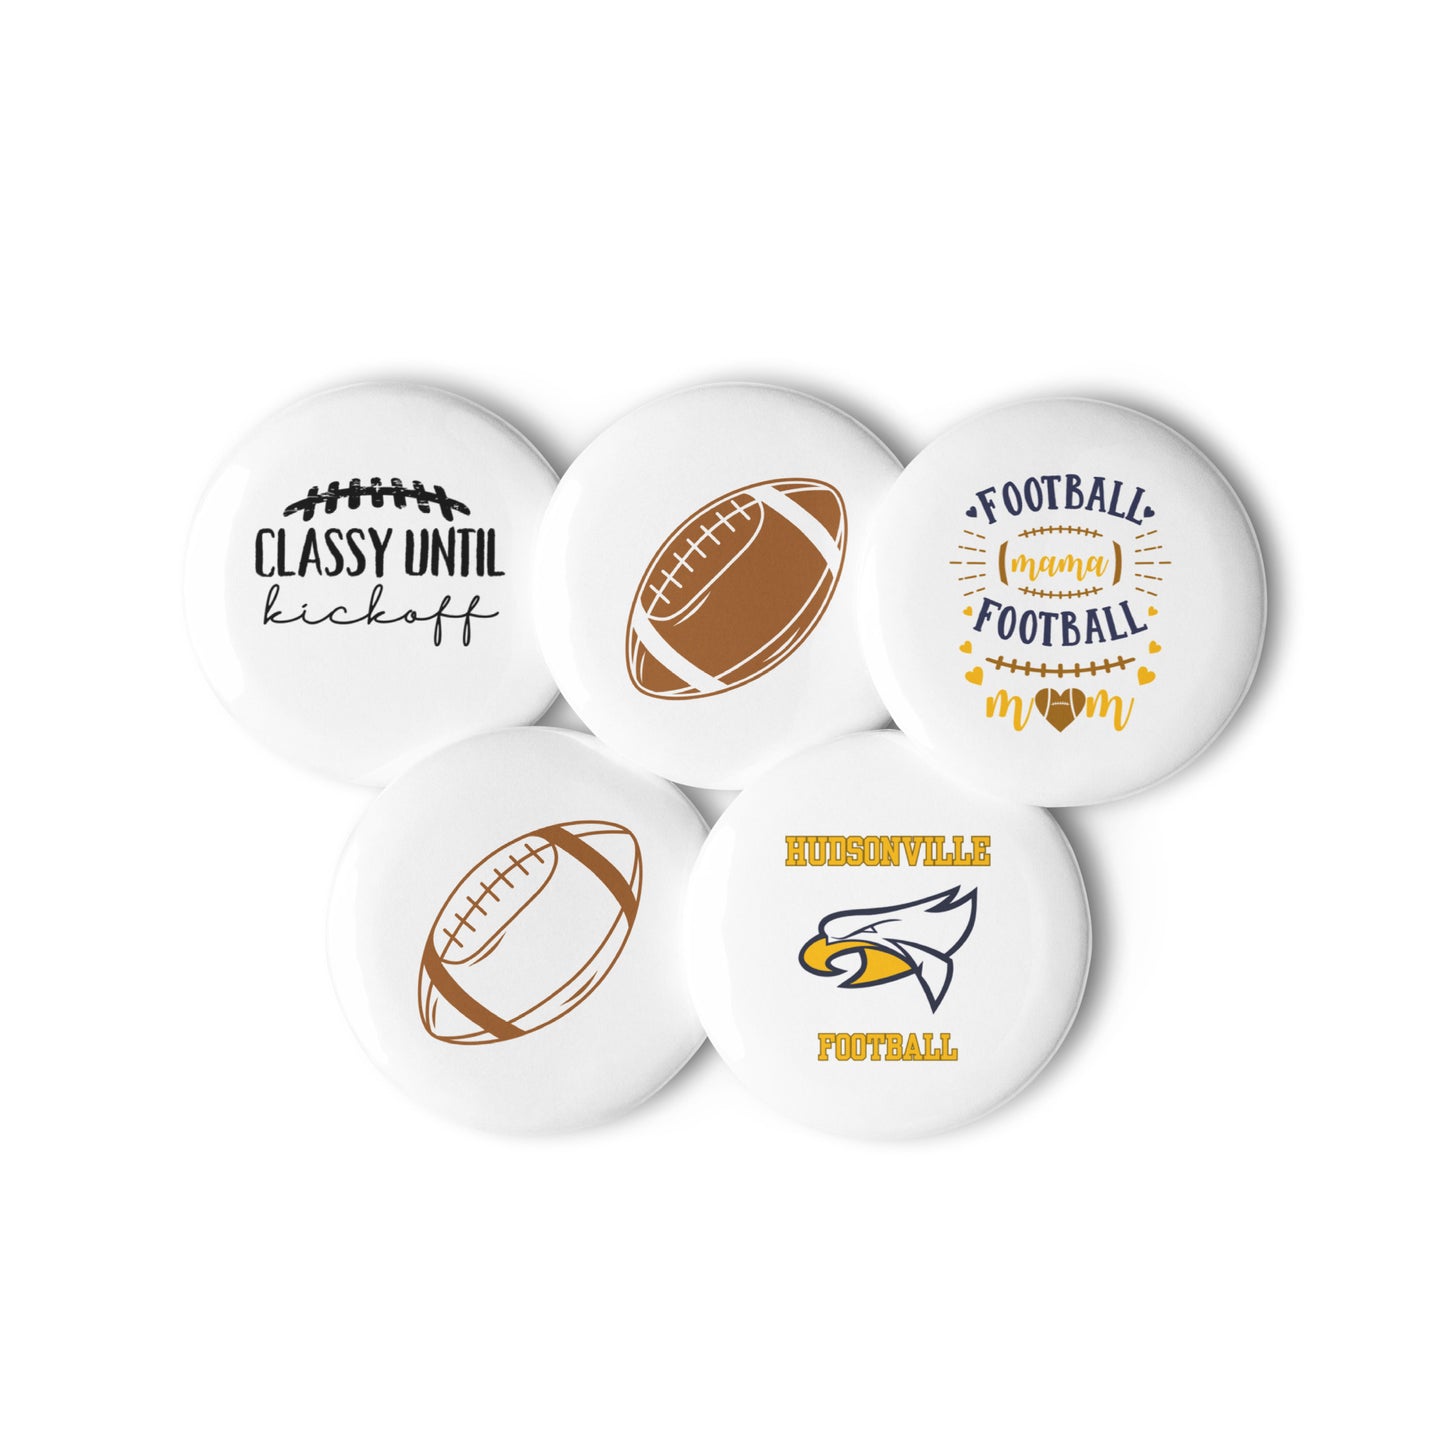 Hudsonville Football Set of pin buttons